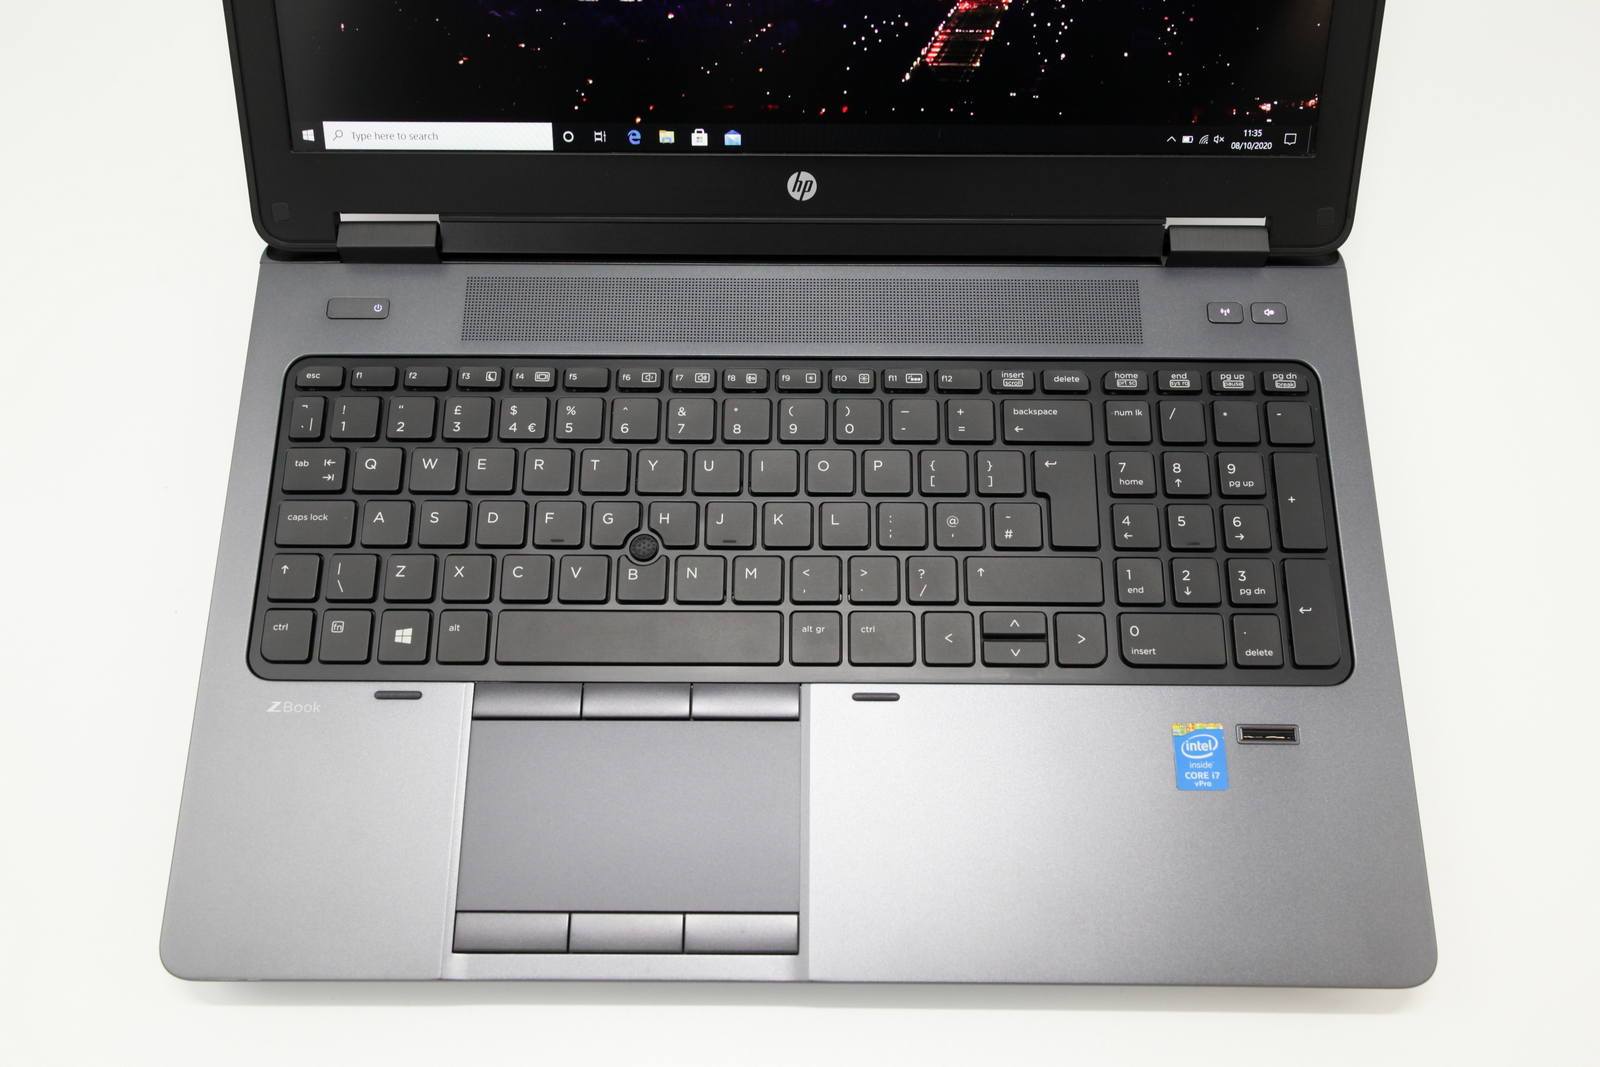 HP ZBook 15 G2 CAD Laptop: 32GB RAM, 4th Gen Core i7, 256GB+HDD, Warranty, VAT - CruiseTech